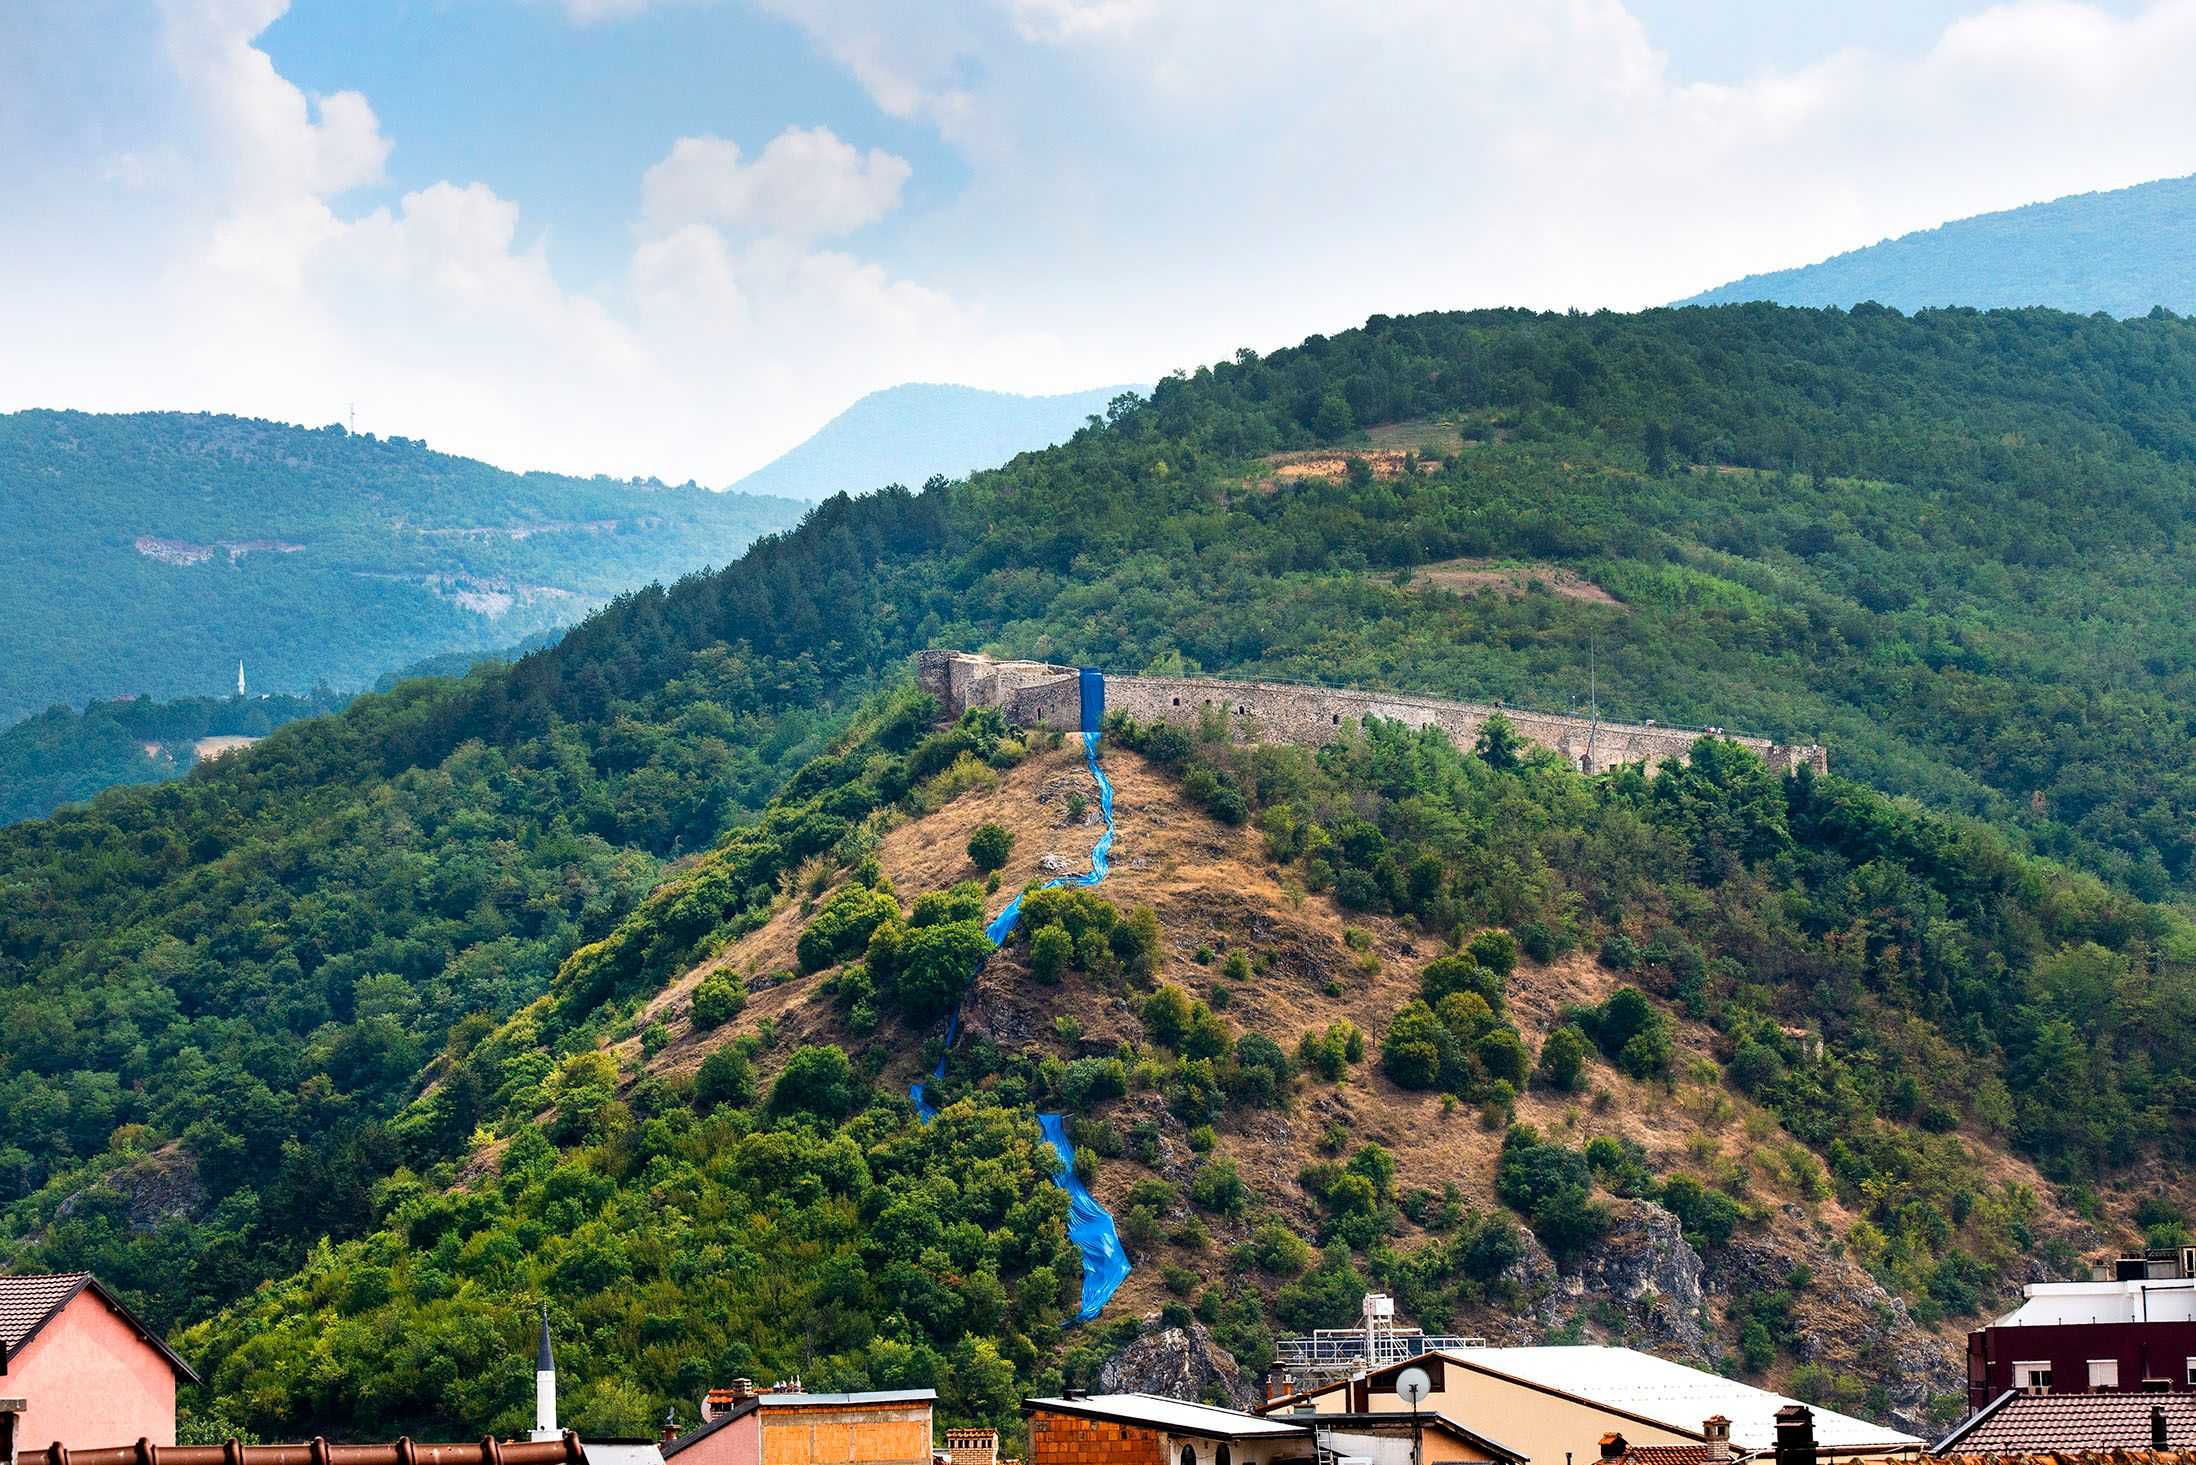 Streams of blue fabric by Hera Büyüktaşciya runs down a hill near Prizren